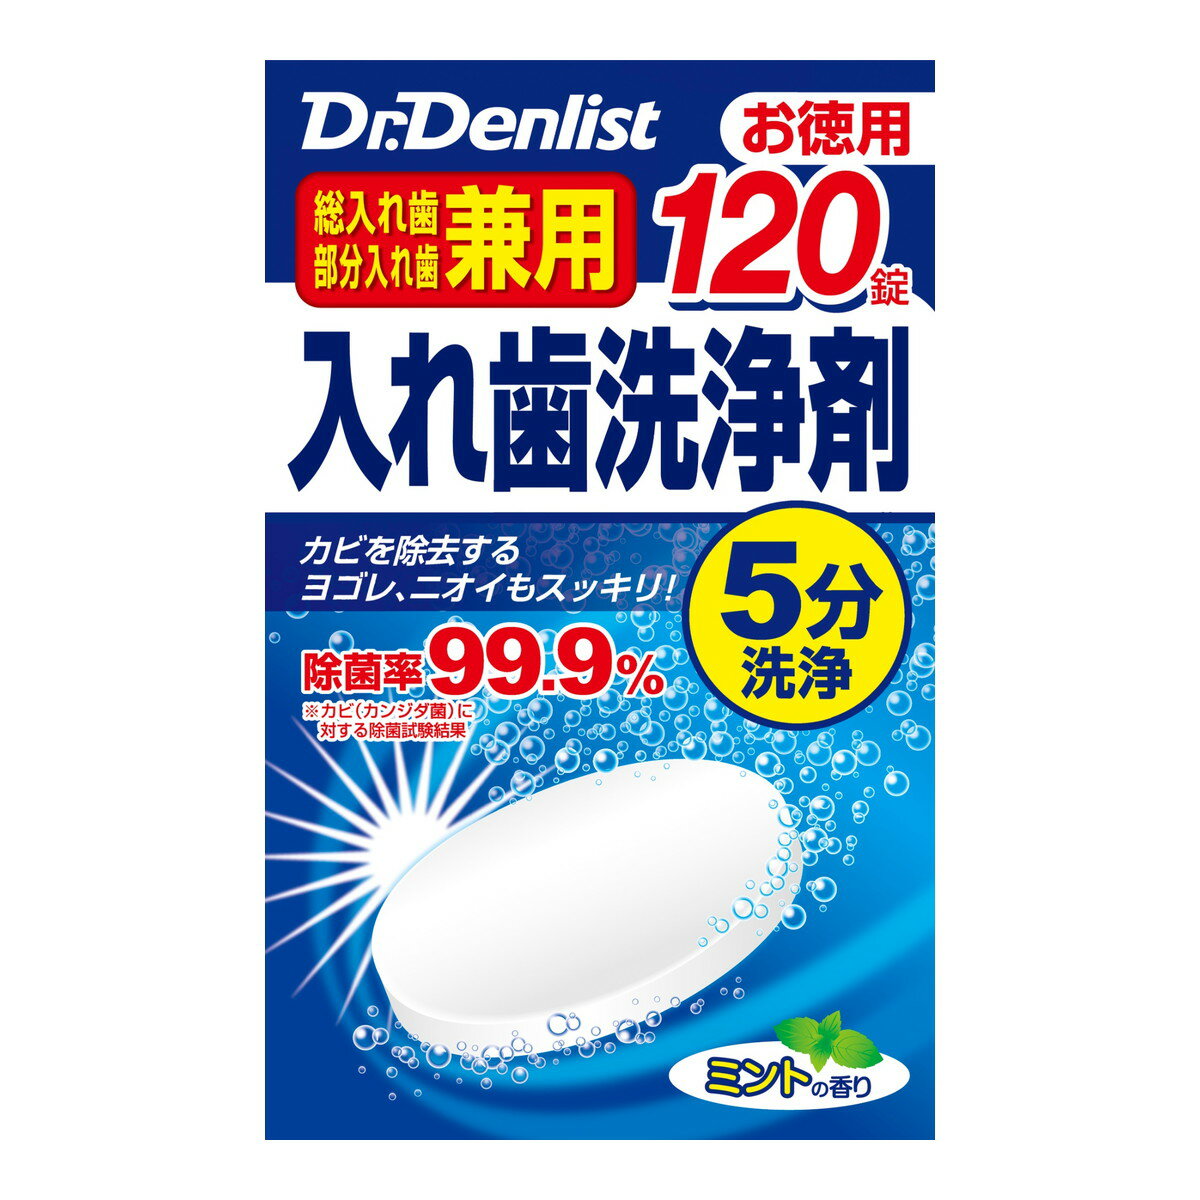 Dr.Denlist ドクターデンリスト 総入れ歯 部分入れ歯兼用 入れ歯洗浄剤 120錠 120錠